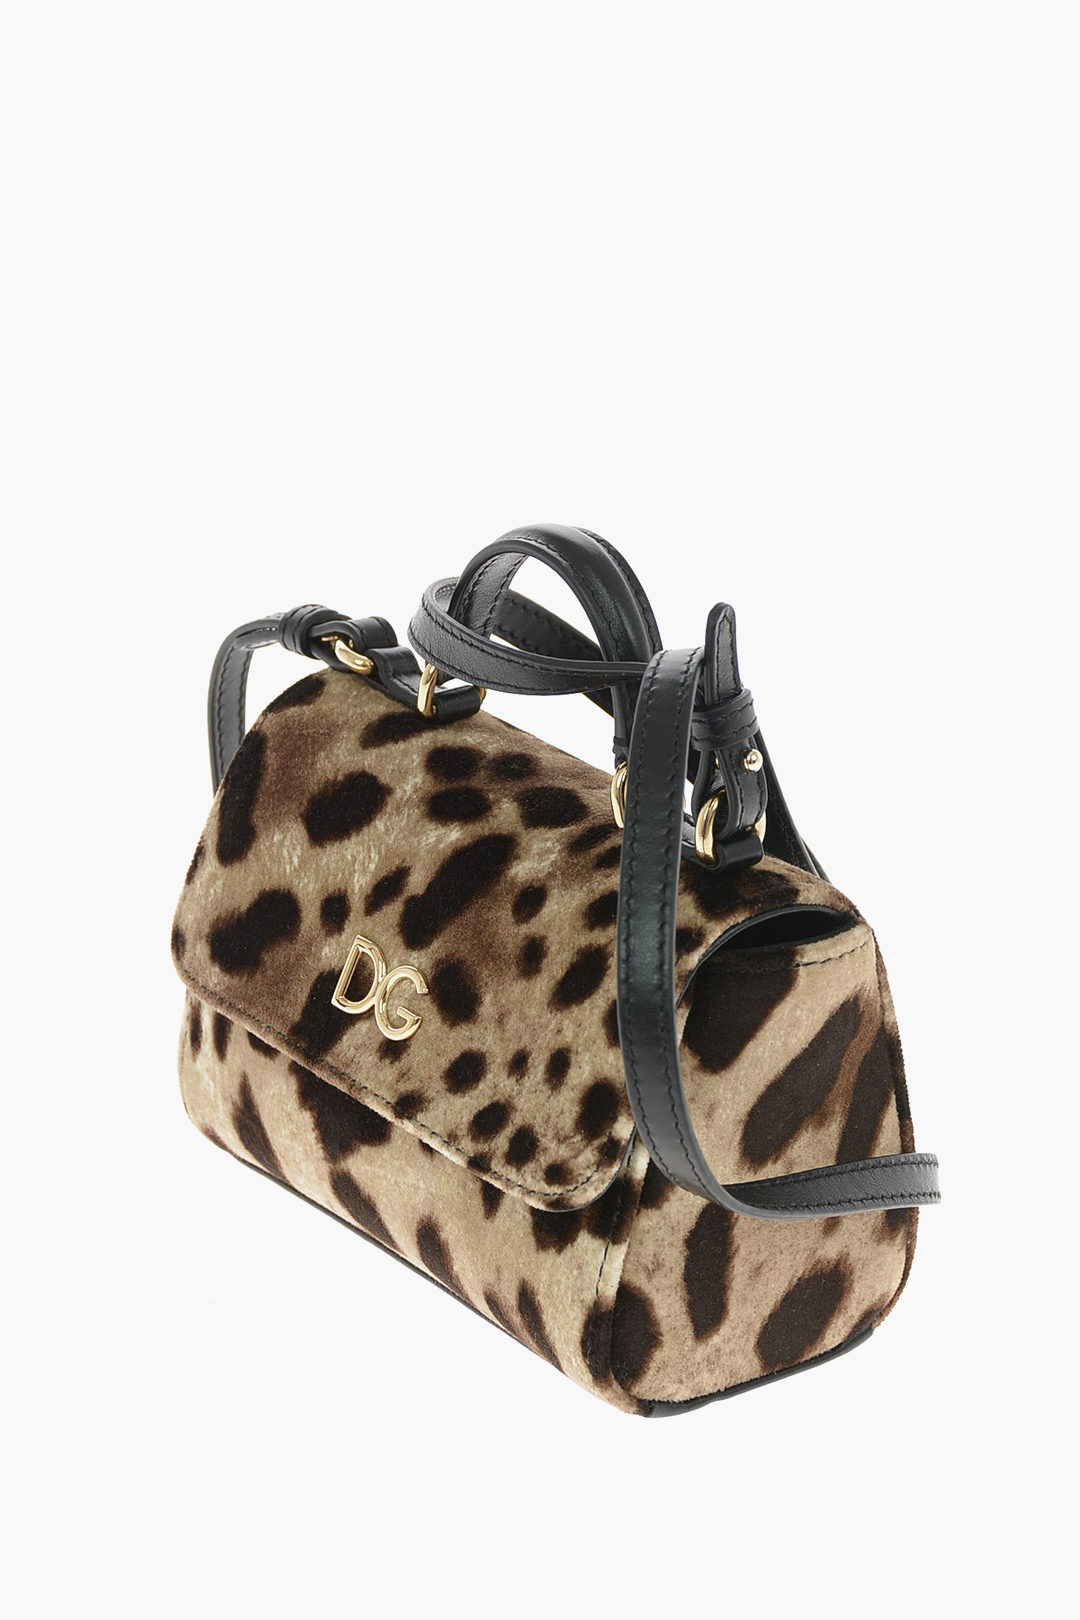 Dolce & Gabbana Kids Leopard-Print Changing Bag Set - White